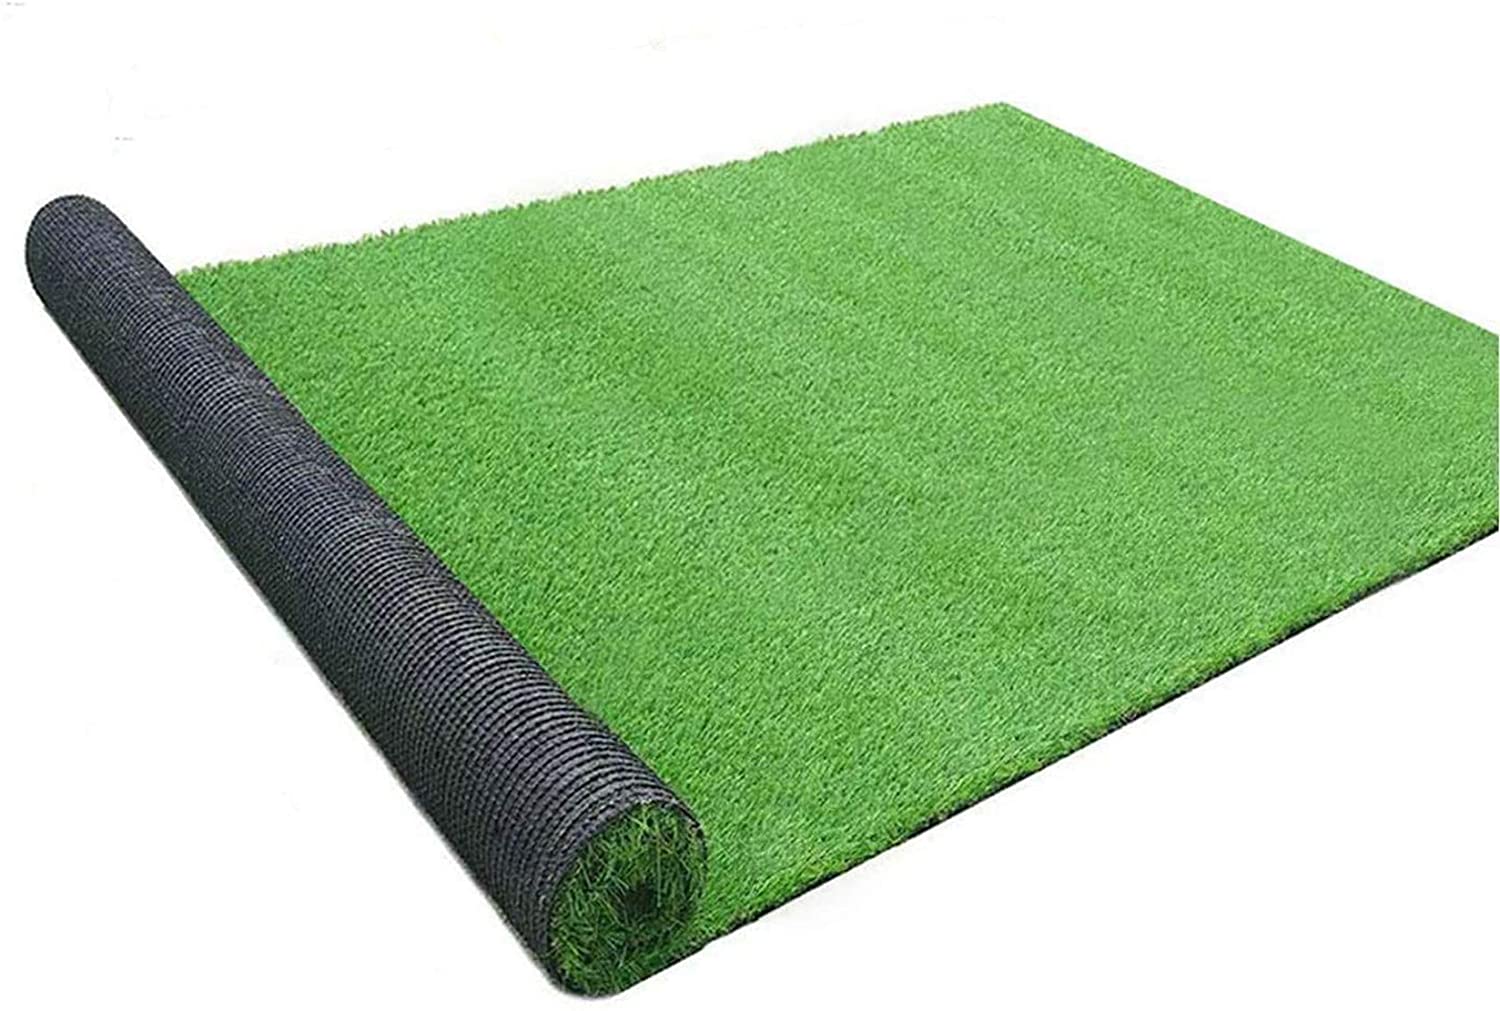 Goasis Lawn Eco-Friendly Fake Grass Rug